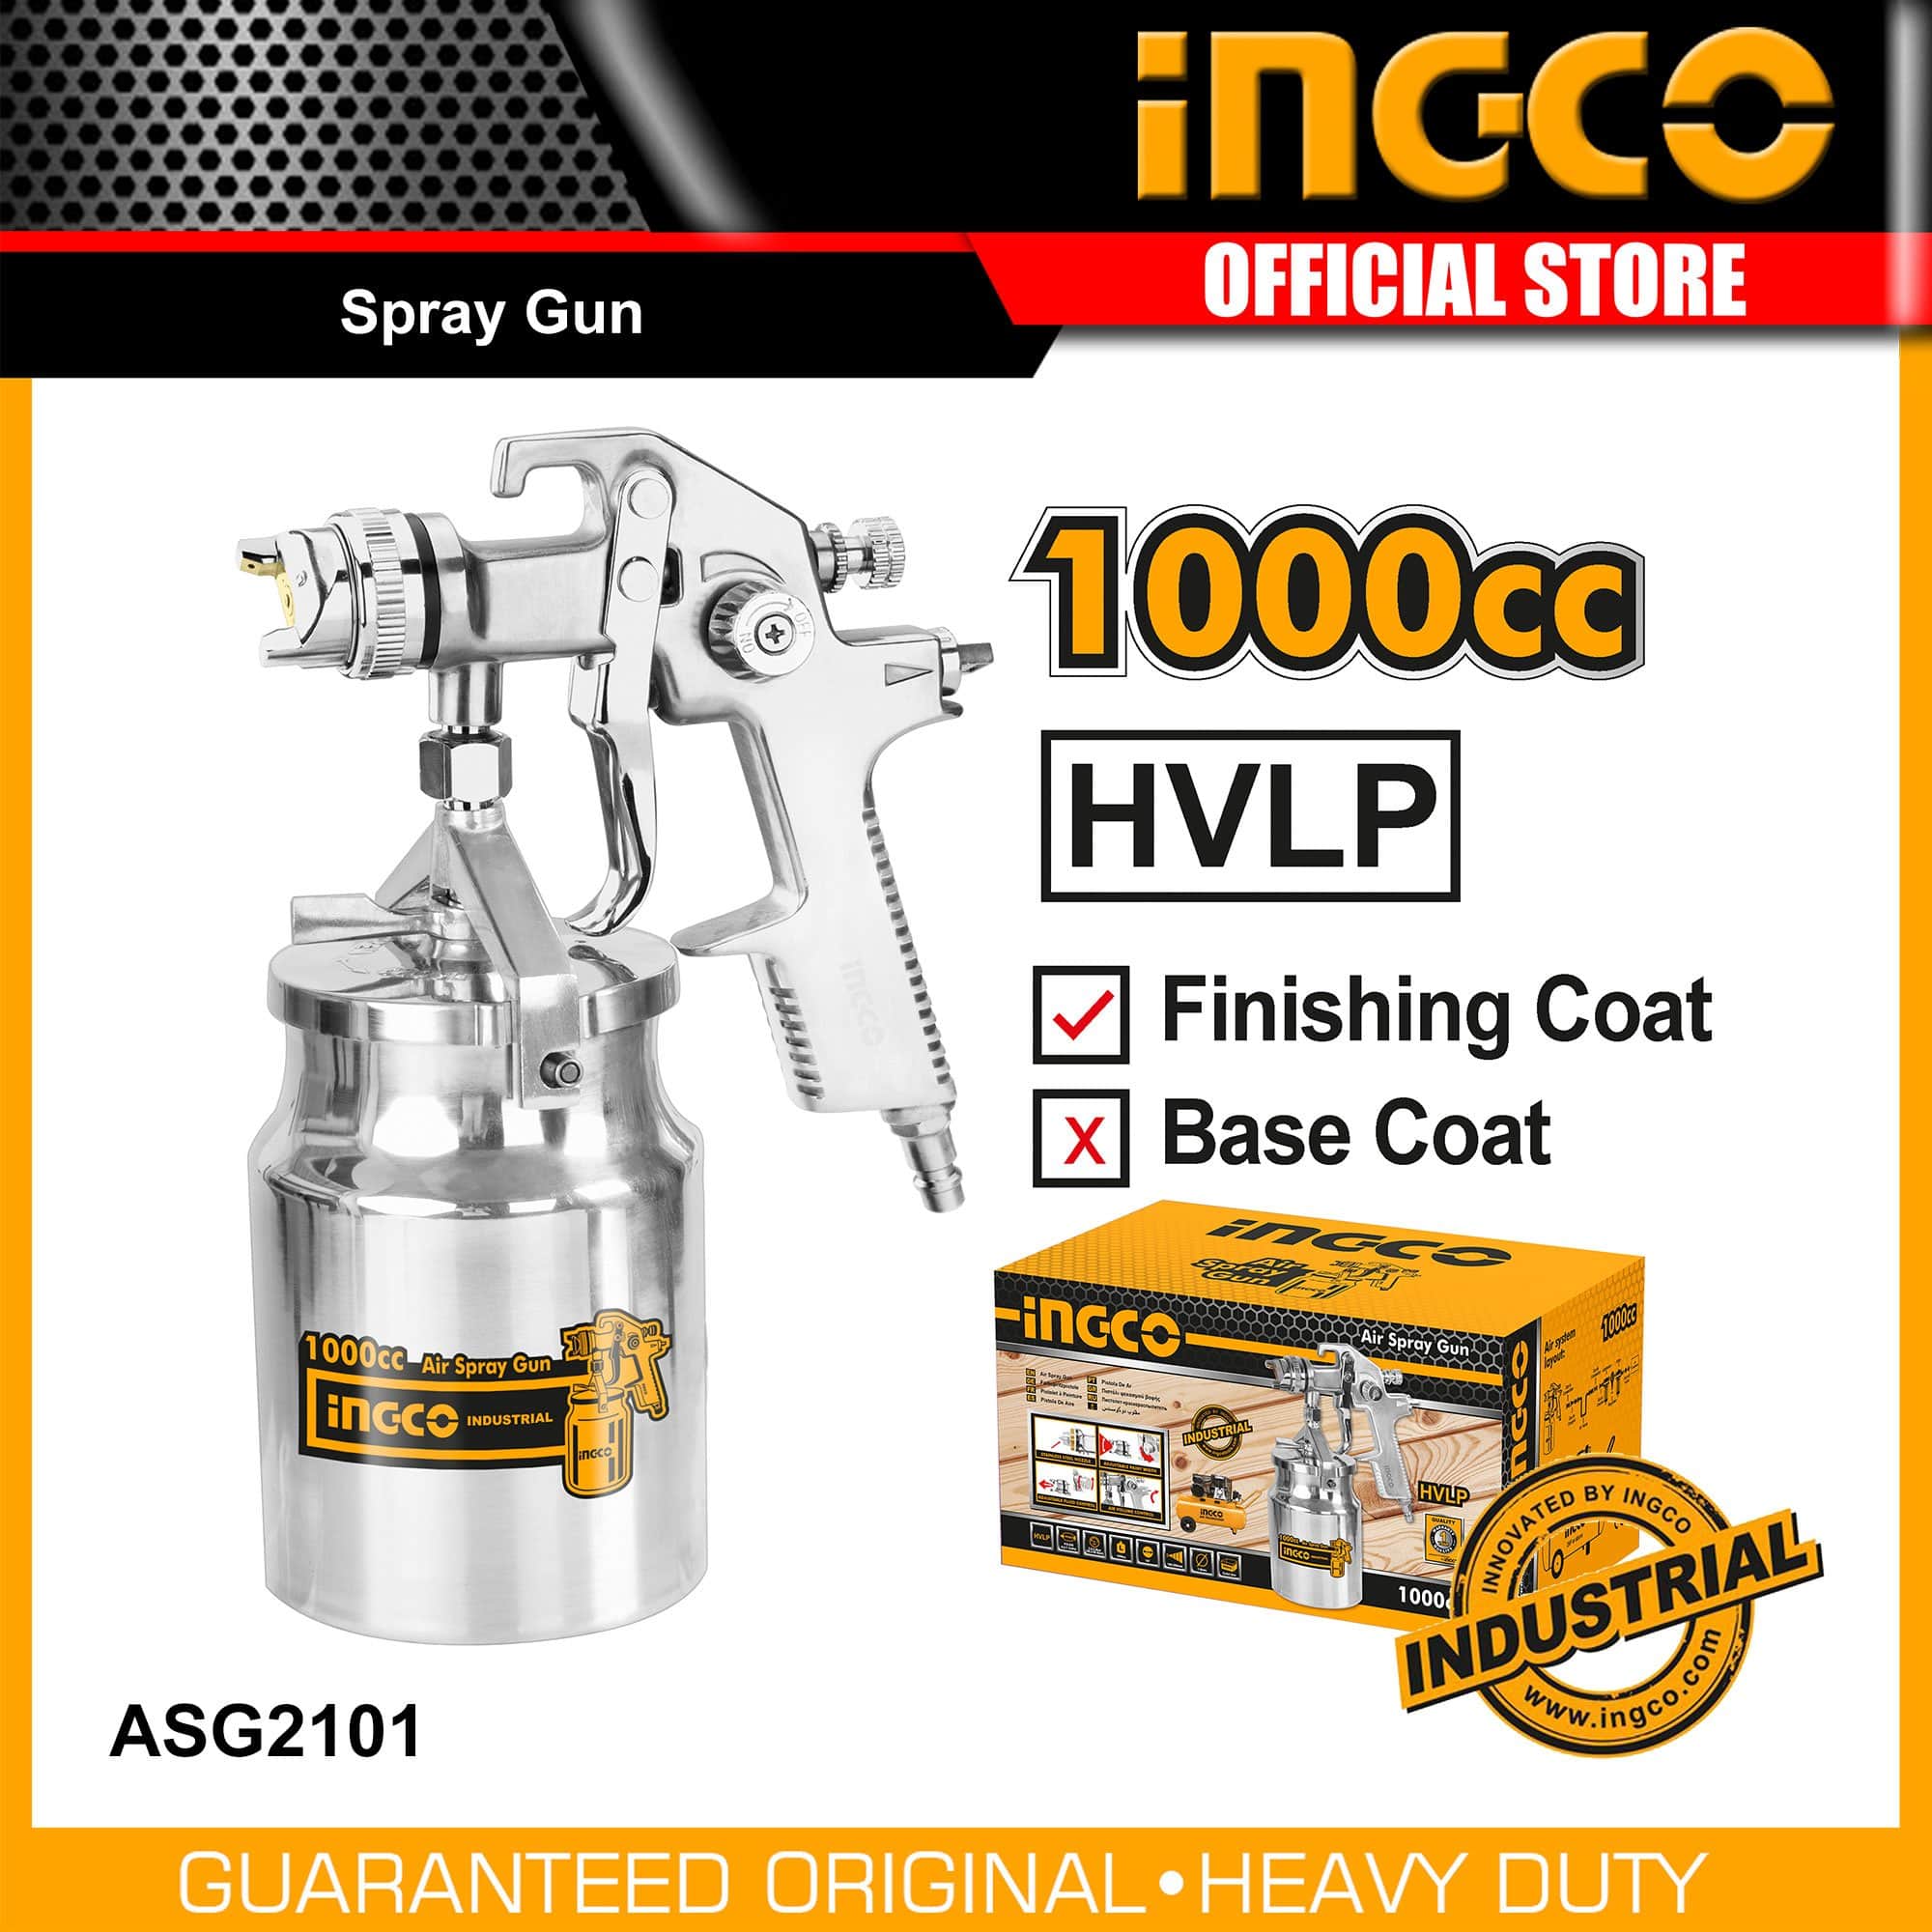 Ingco HVLP Spray Gun 1000cc - ASG2101 | Supply Master | Accra, Ghana Tools Building Steel Engineering Hardware tool